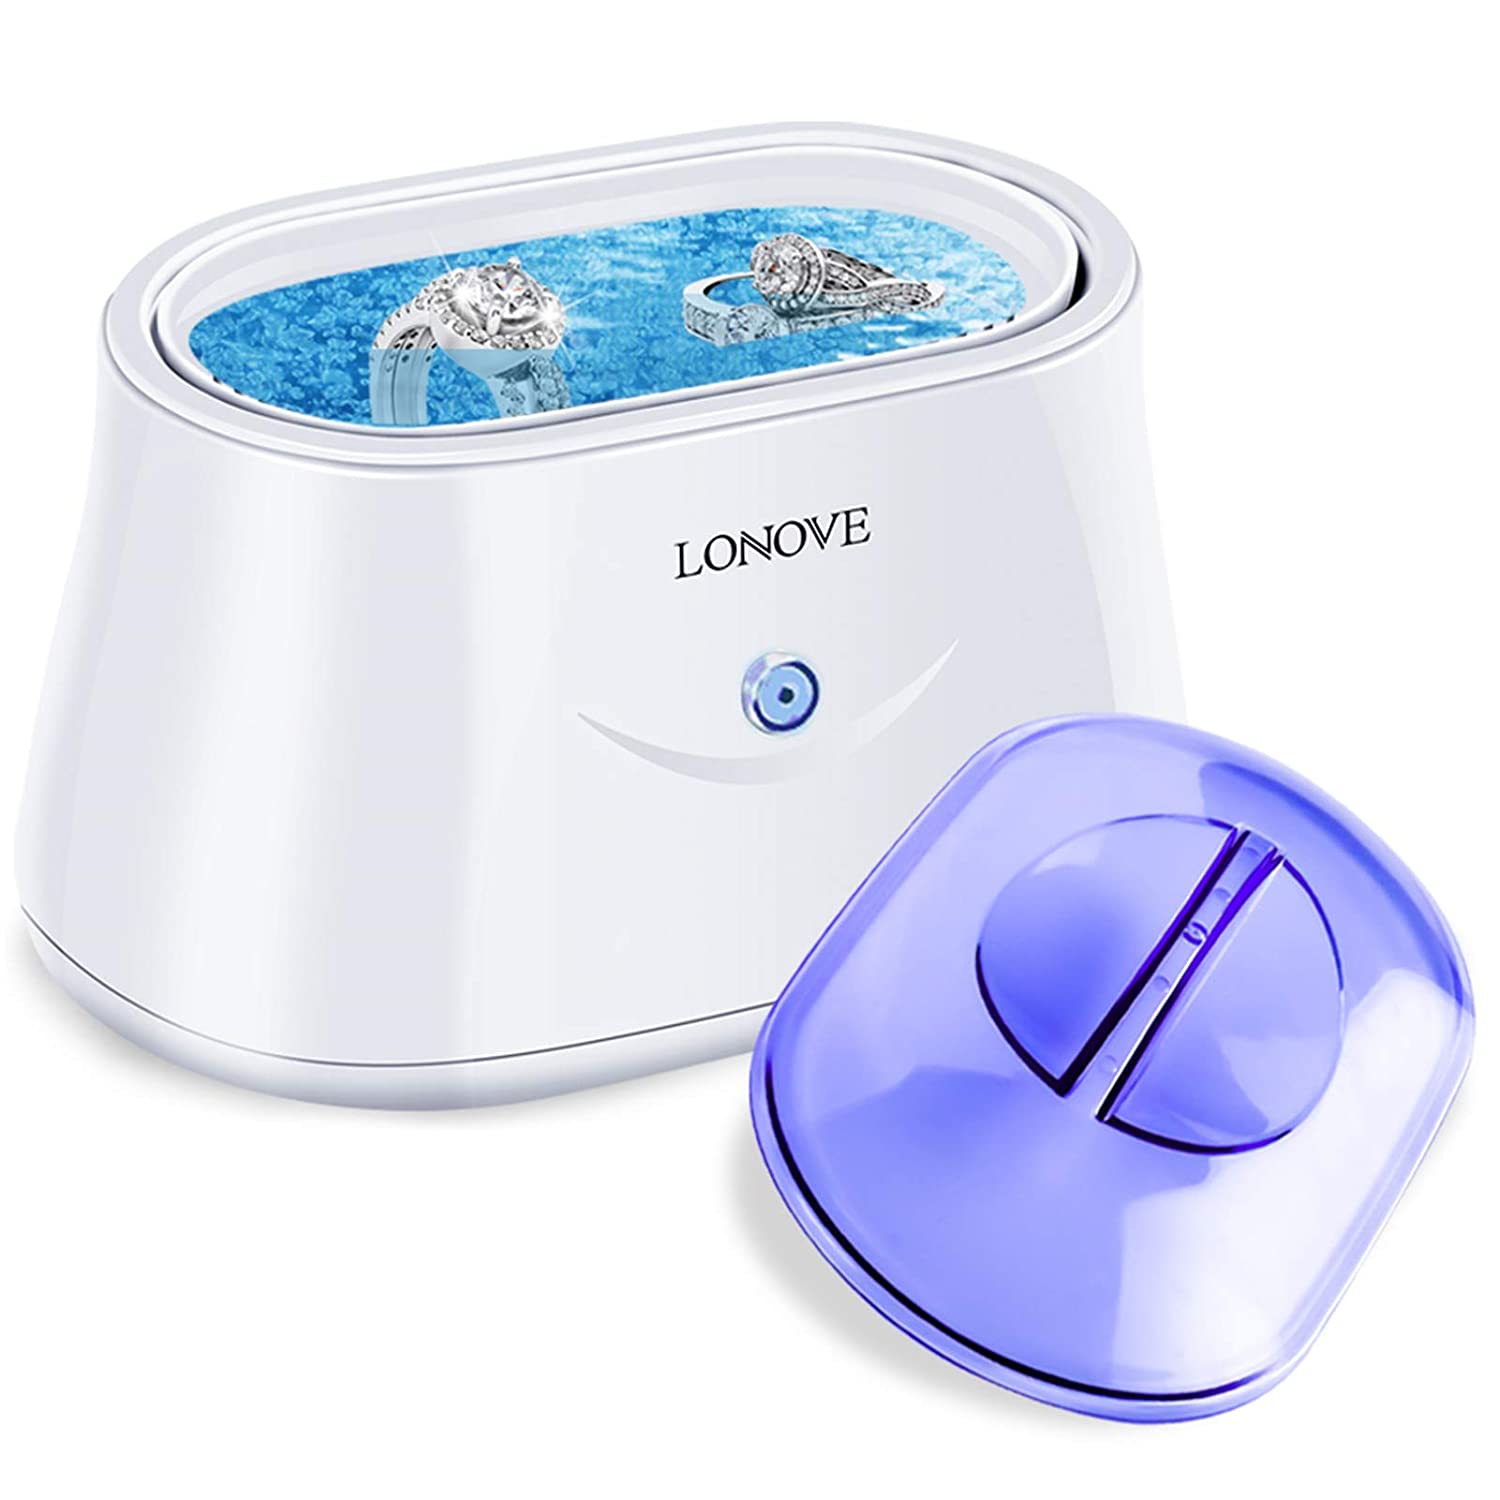 Lonove Portable Ultrasonic Jewelry Cleaner